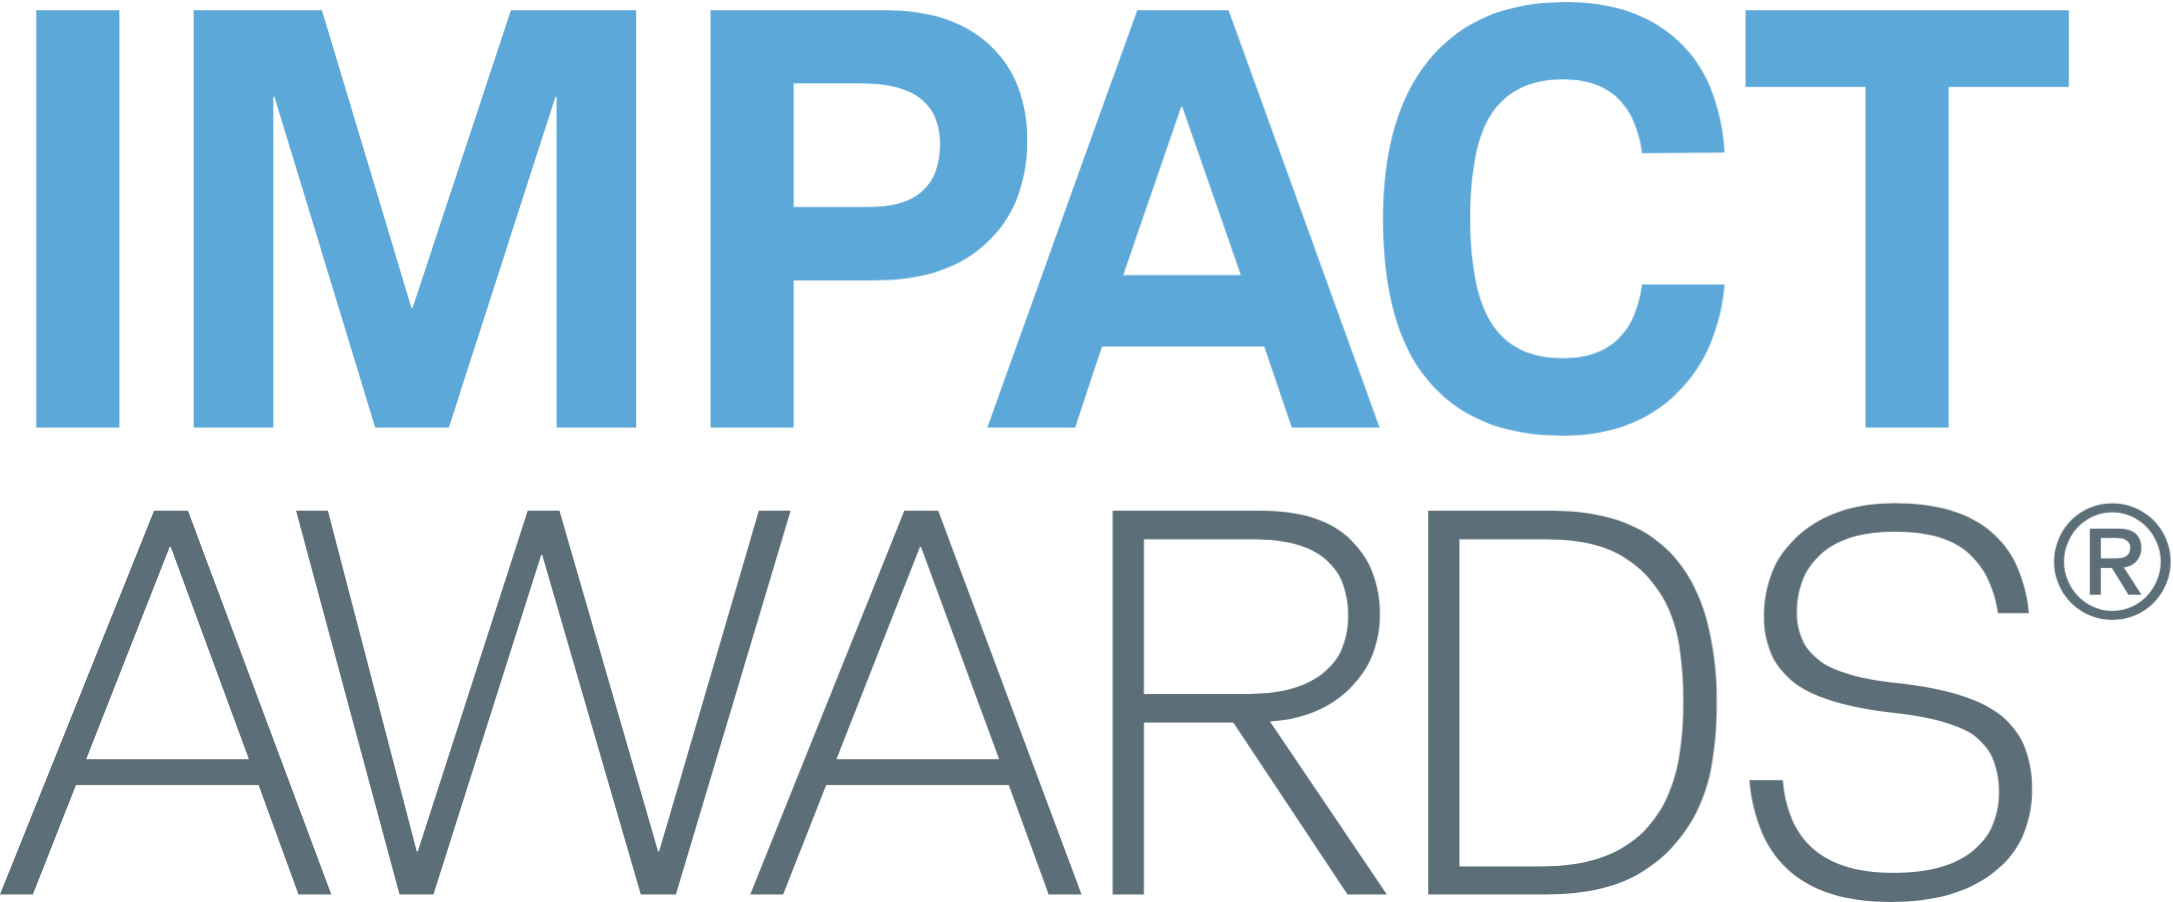 Conrad Siegel Actuaries Receives Prestigious Schwab IMPACT Award